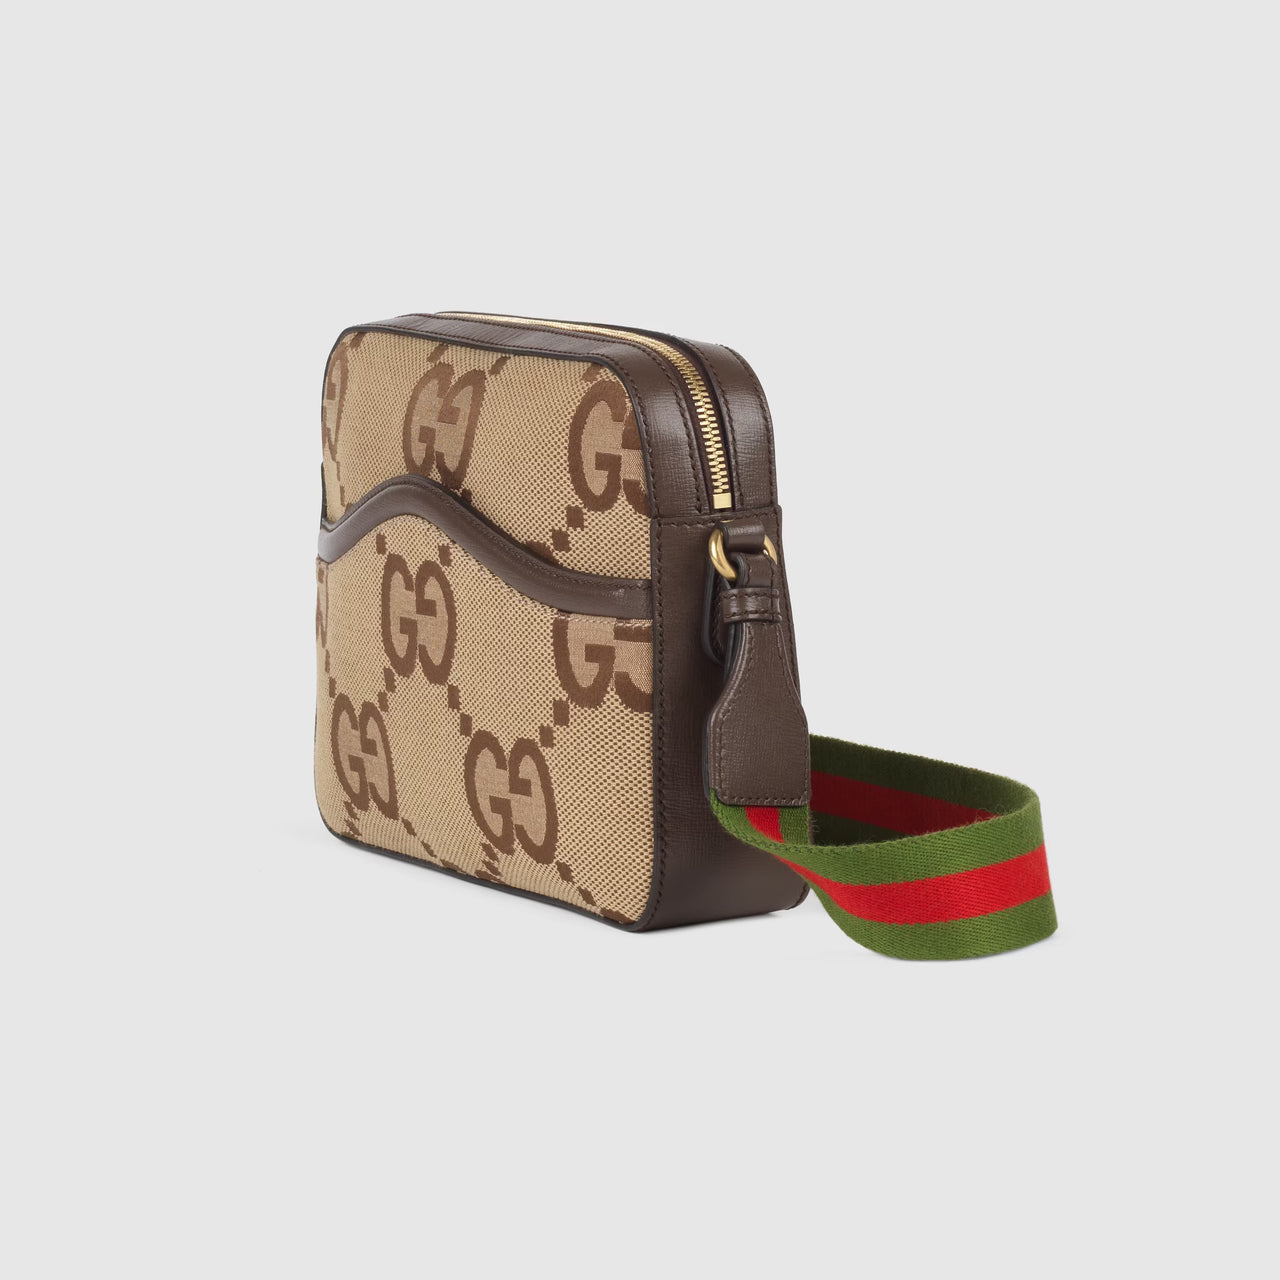 Gucci Jumbo GG Messenger Bag (Camel and Ebony)